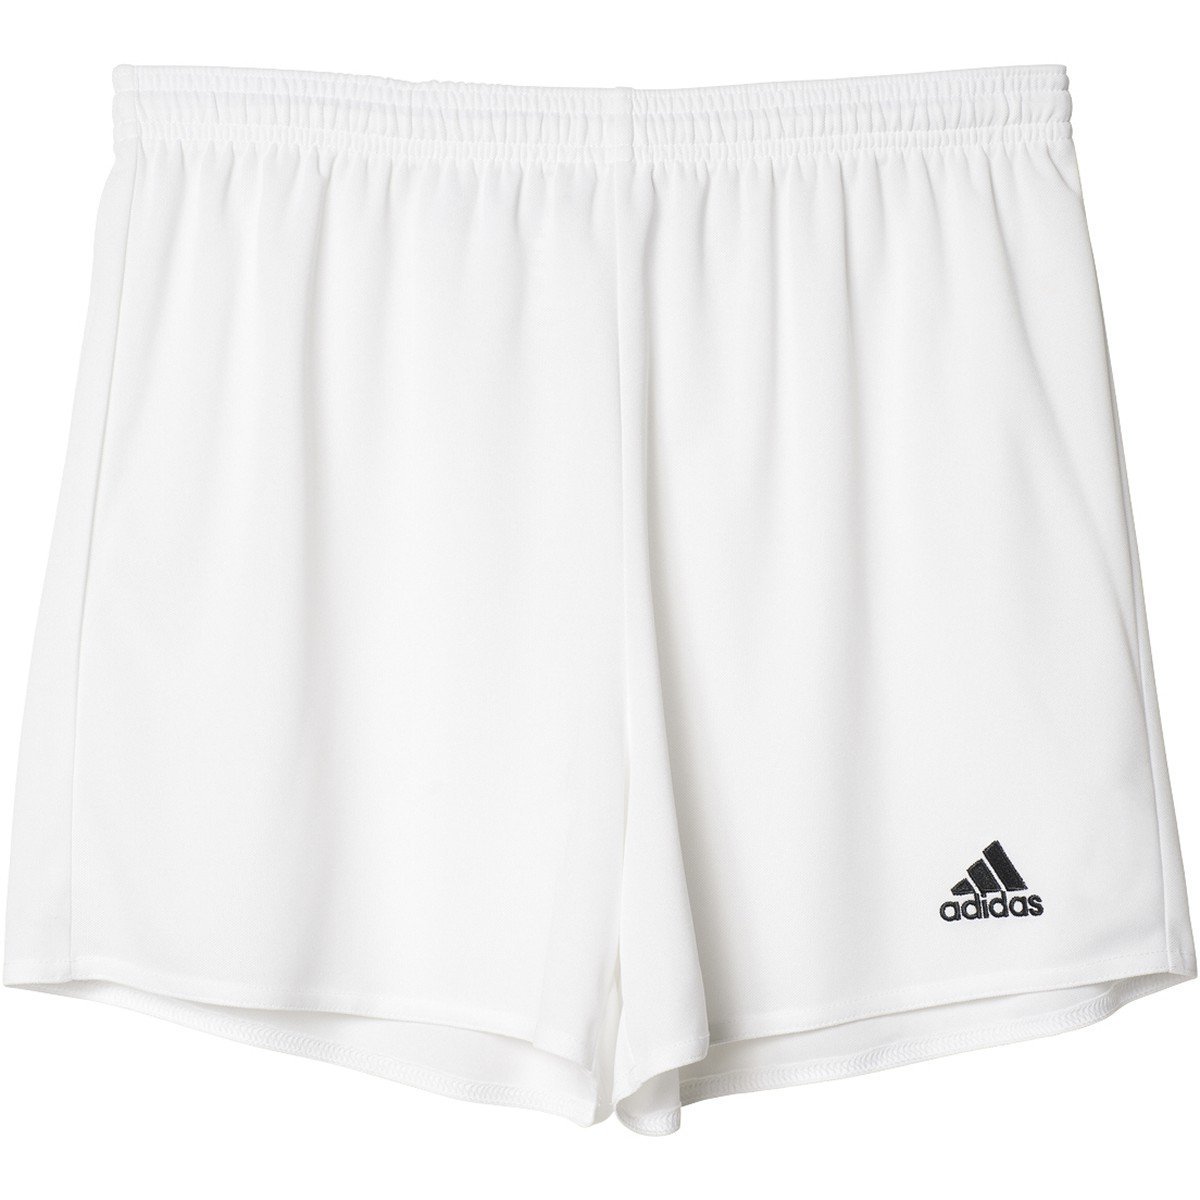 Adidas Women's Parma 16 Short Team Shorts Adidas White/White X-Small 